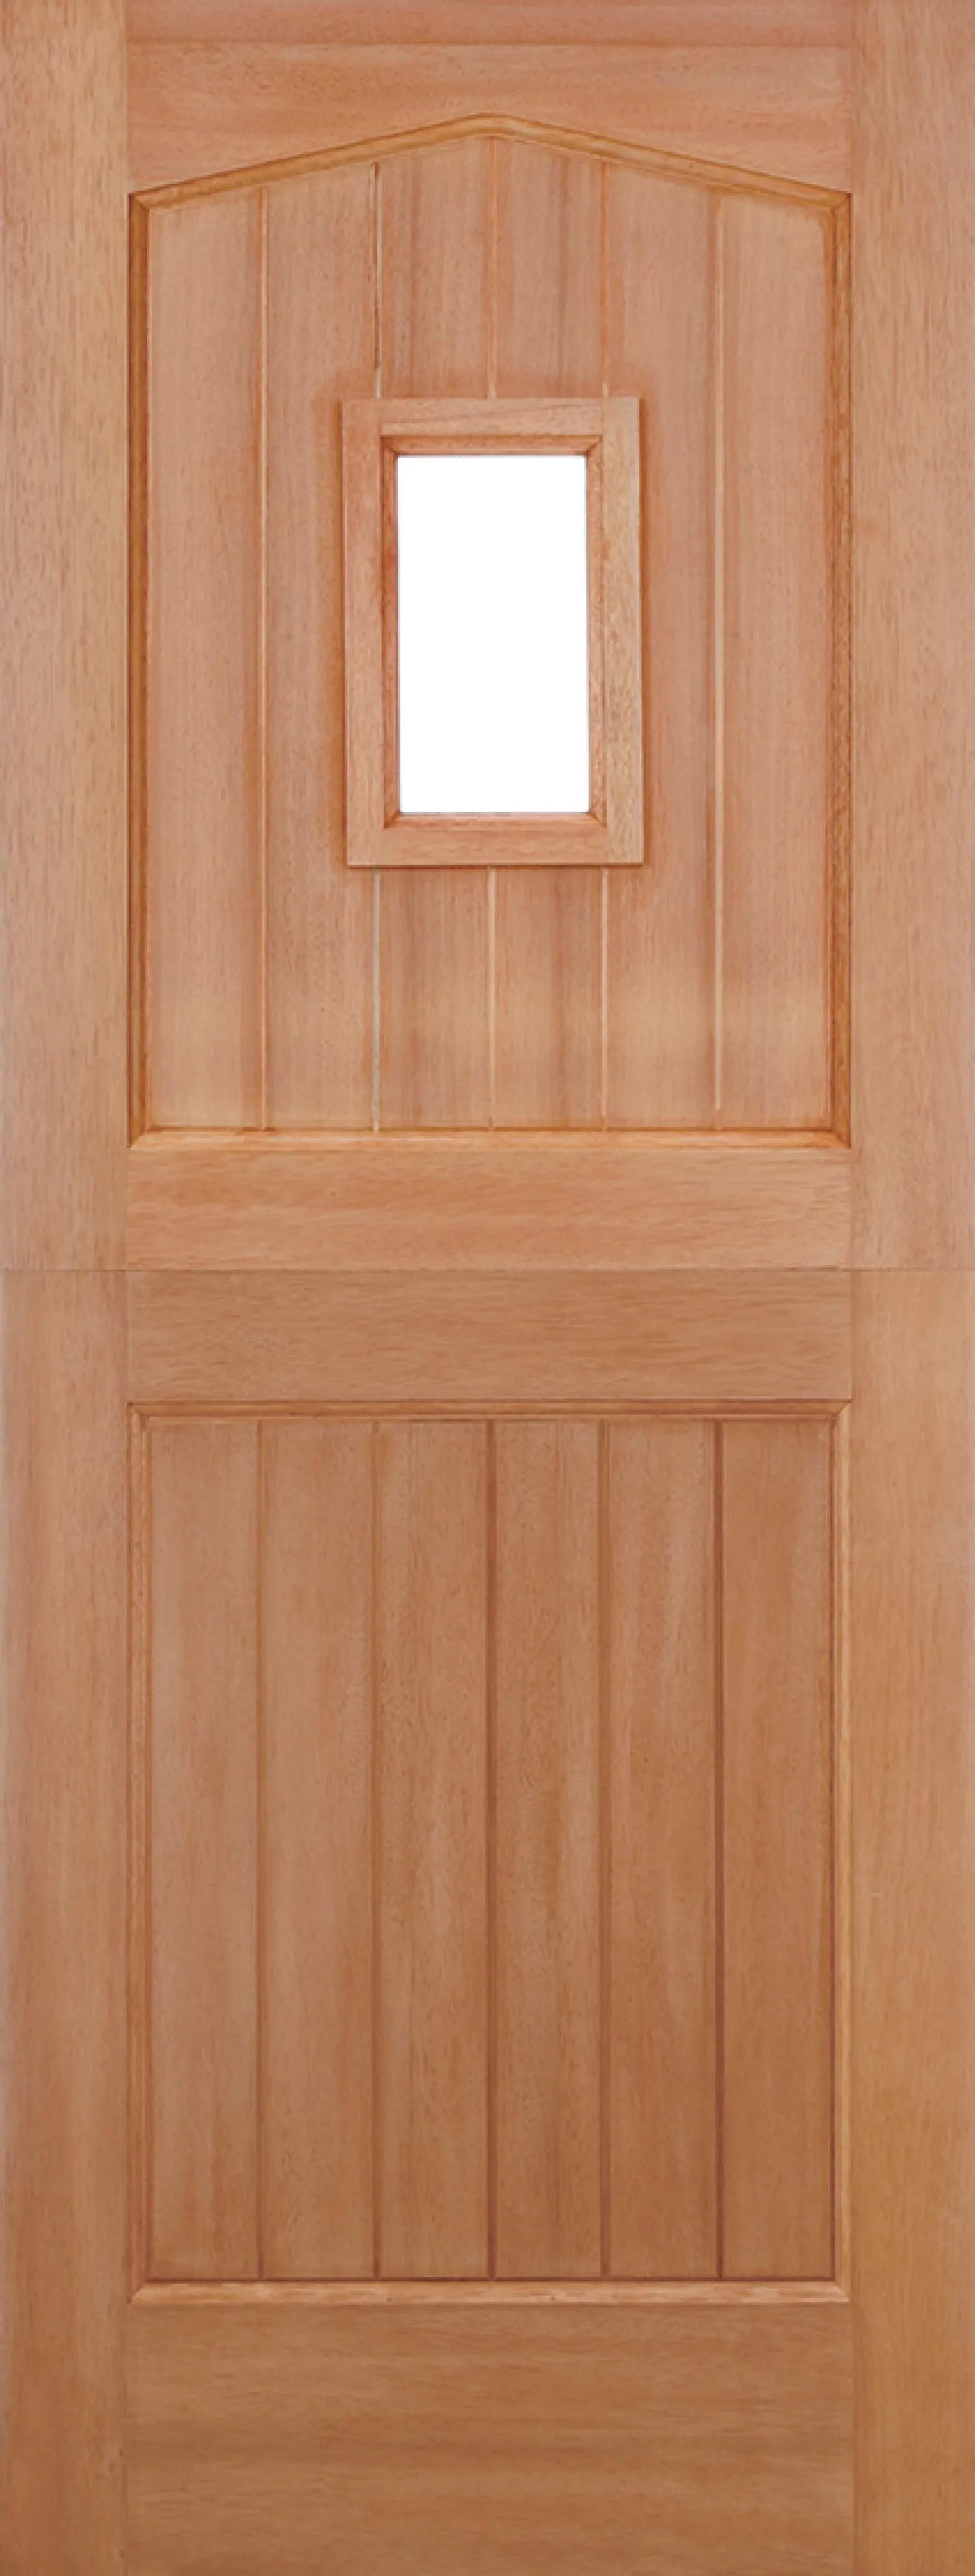 LPD Stable 1L Unglazed Dowelled External Door 2032 x 813 (32") Unfinished Hardwood